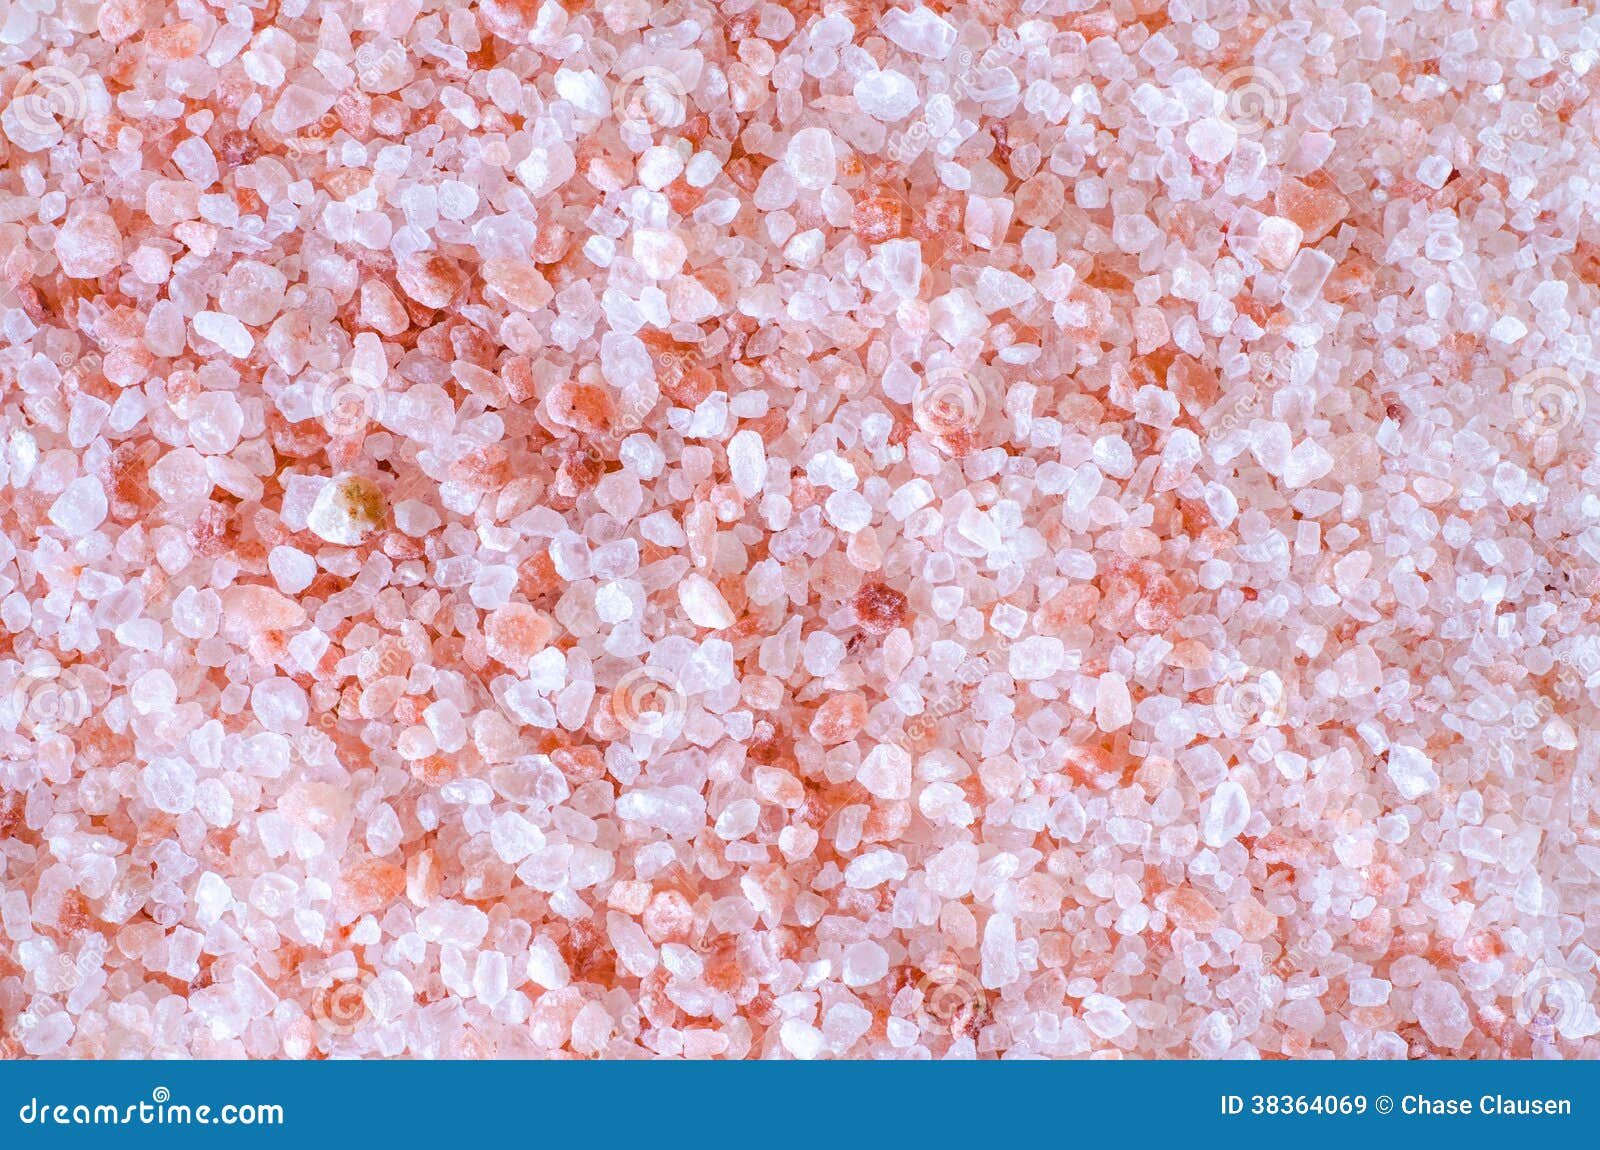 pink himalayan coarse crystal salt